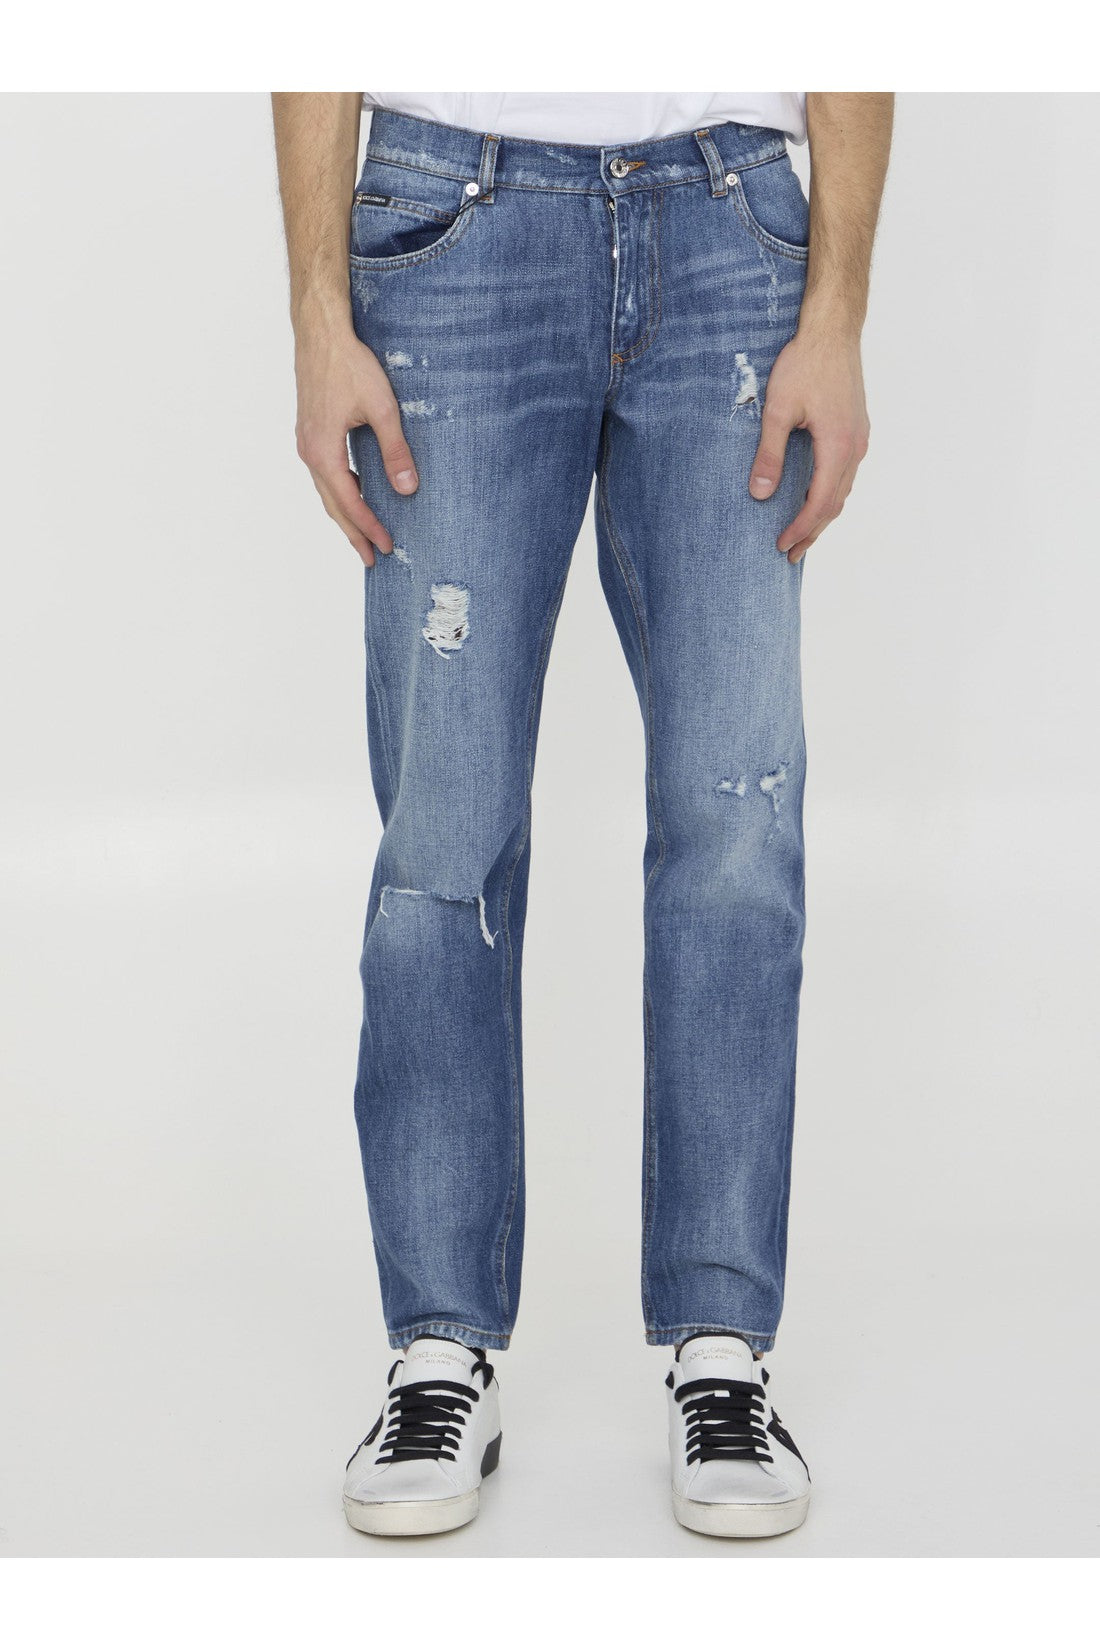 Distressed denim jeans